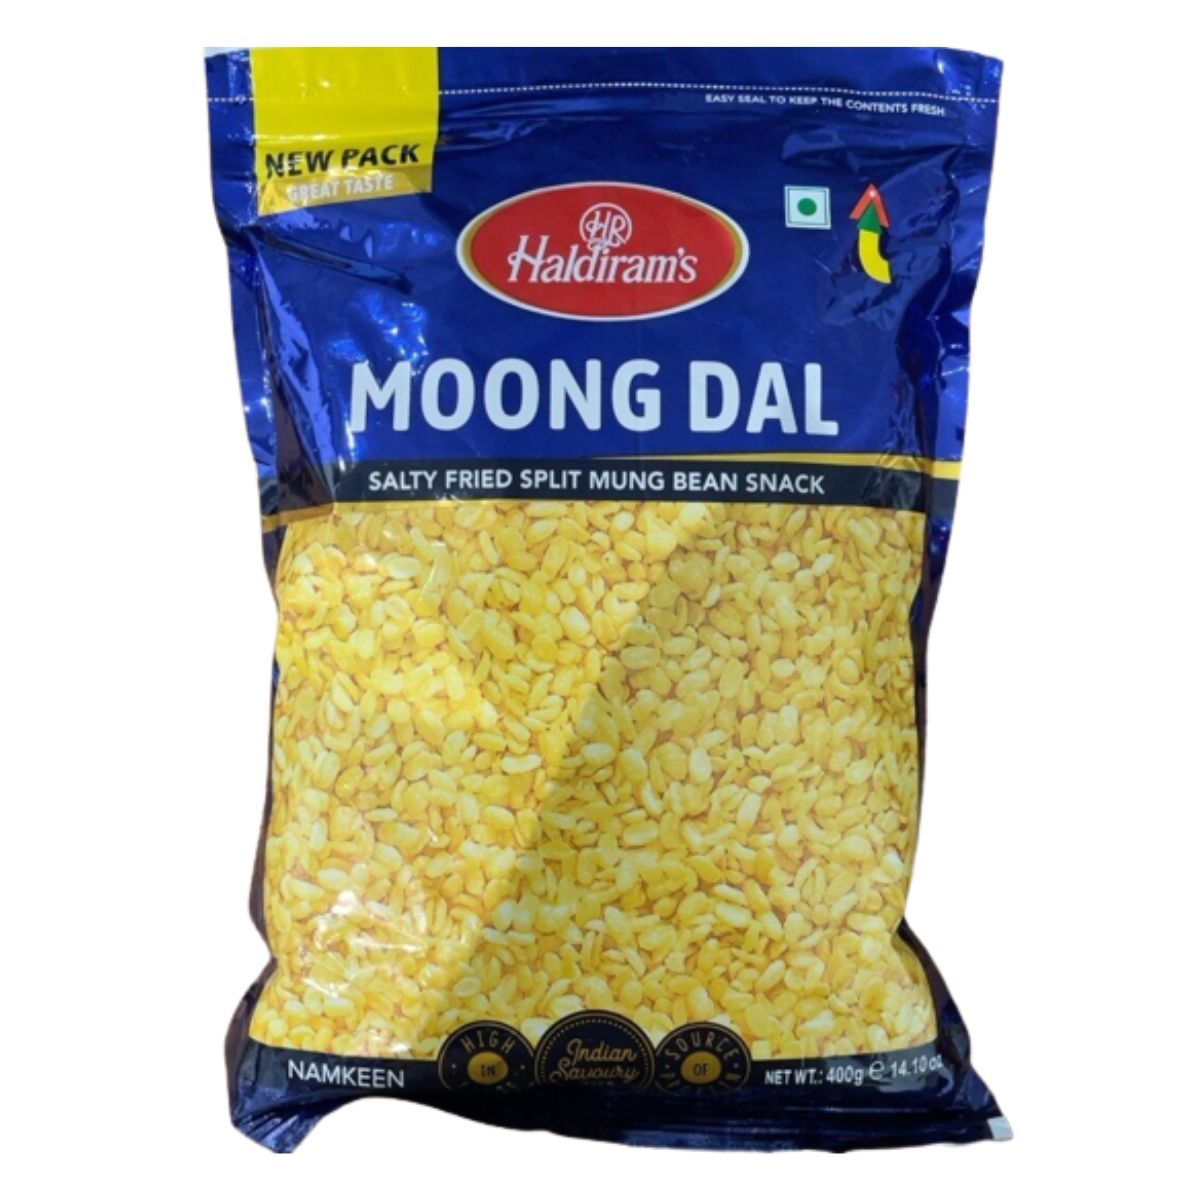 Haldiram's Moong Dal - Salty Fried Split Mung Bean Snack - 400g